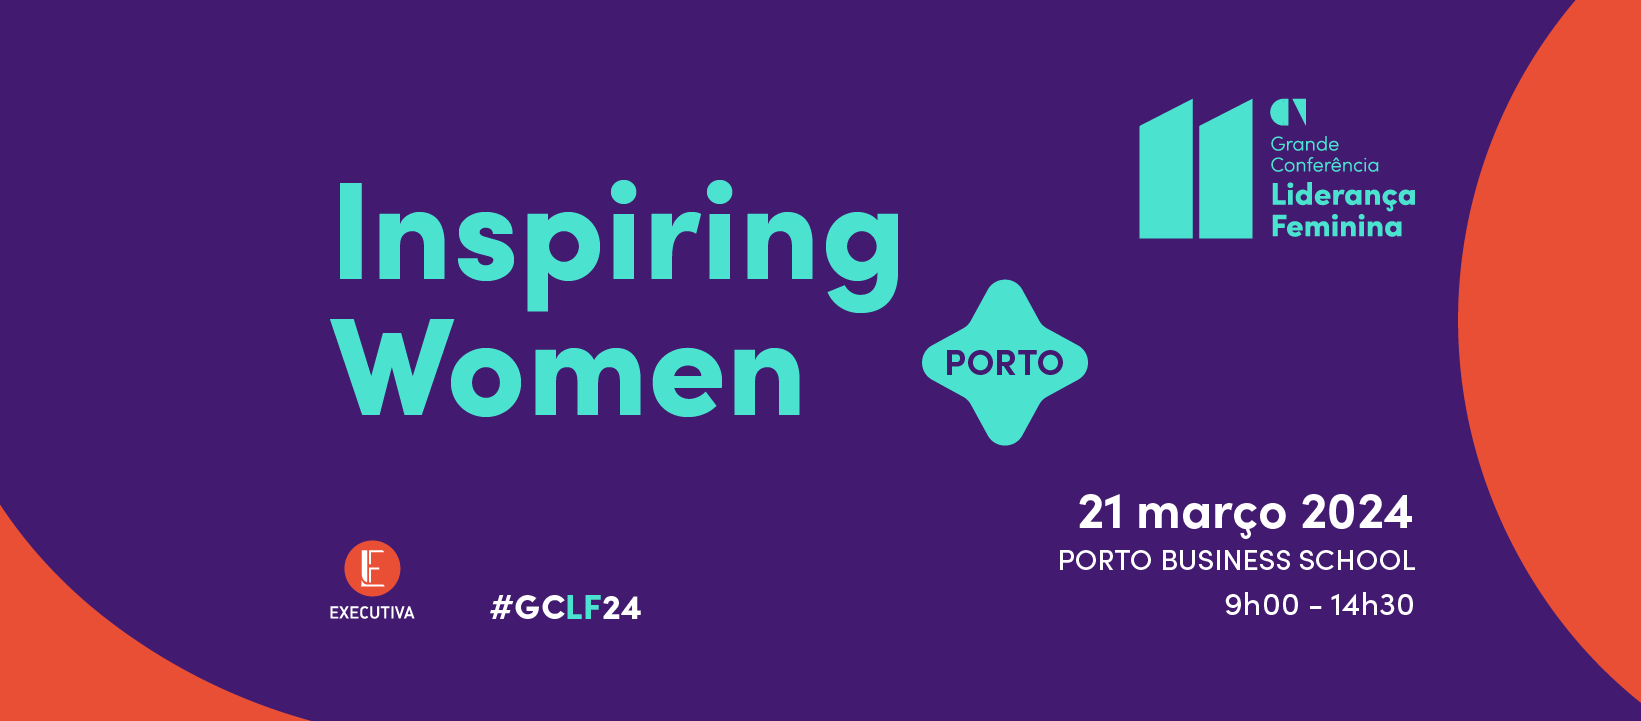 Grande Conferência Liderança Feminina Porto 2024